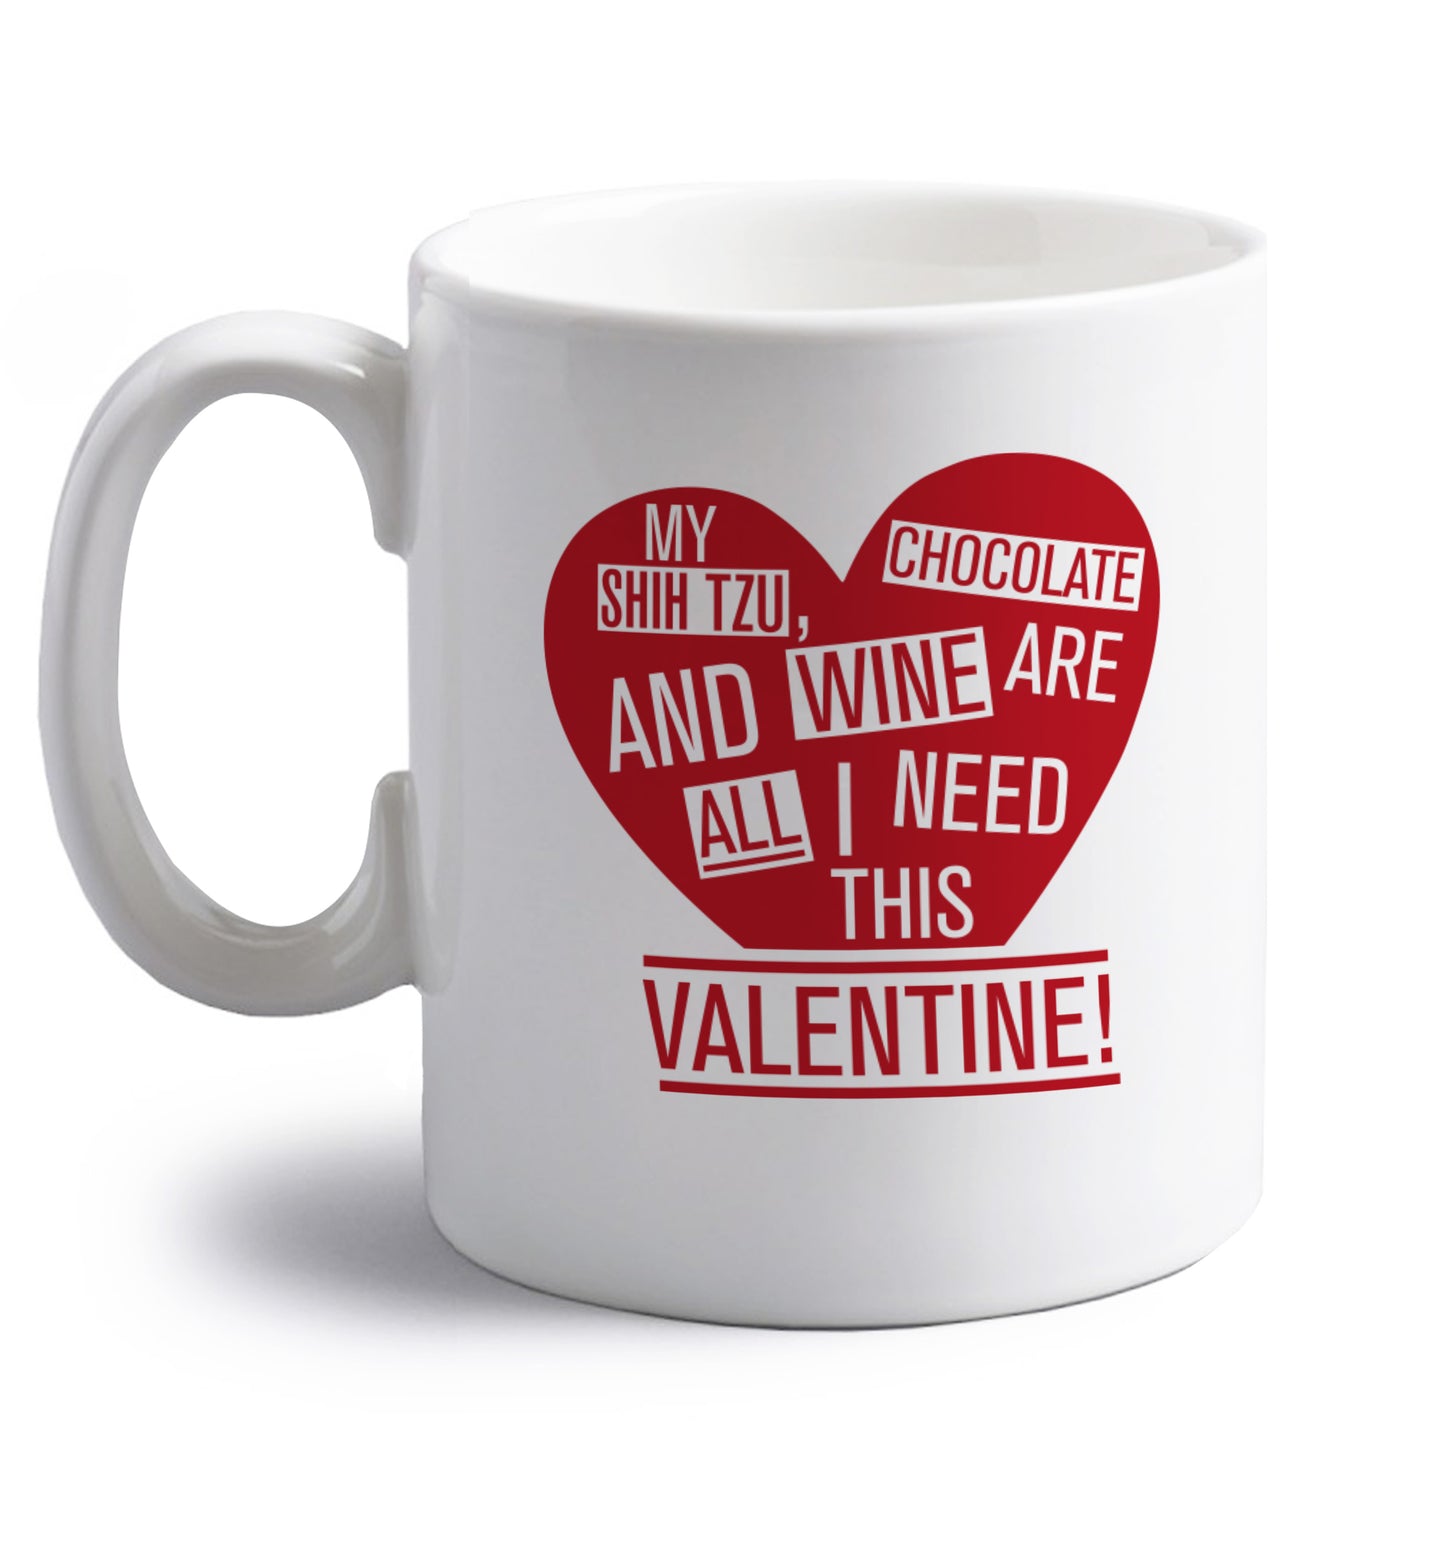 My shih tzu, chocolate and wine are all I need this valentine! right handed white ceramic mug 